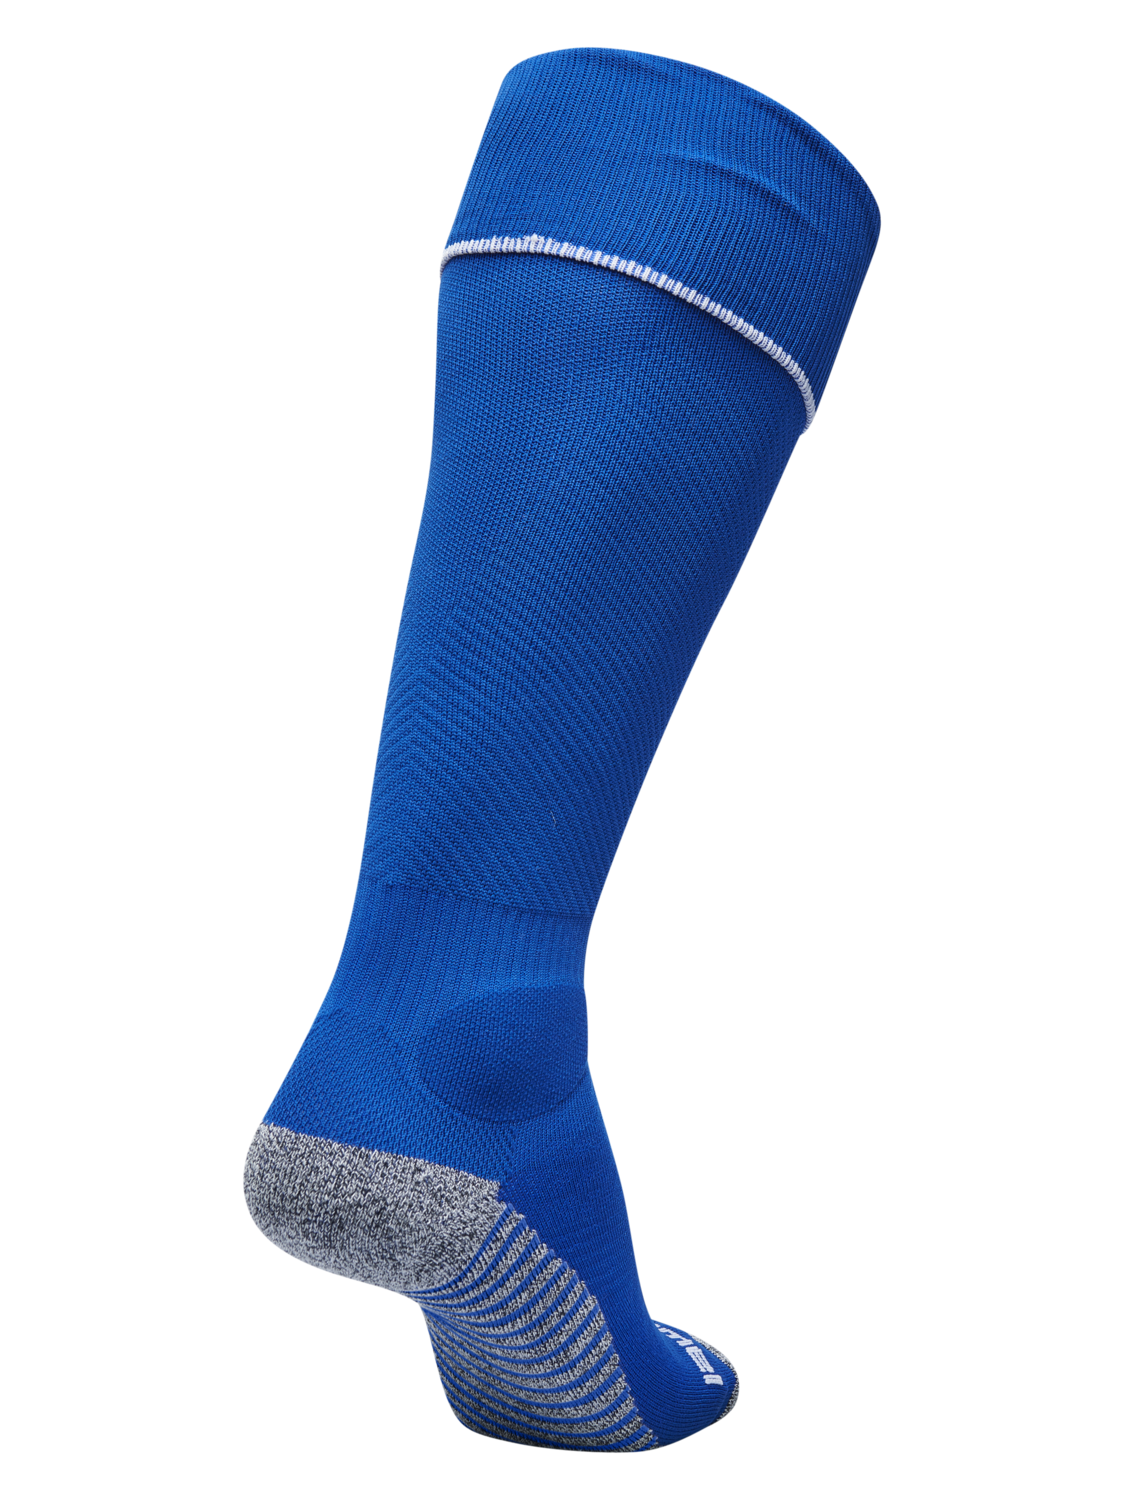 Details about   Hummel Football Soccer Sports Mens Pro Socks Blue White 